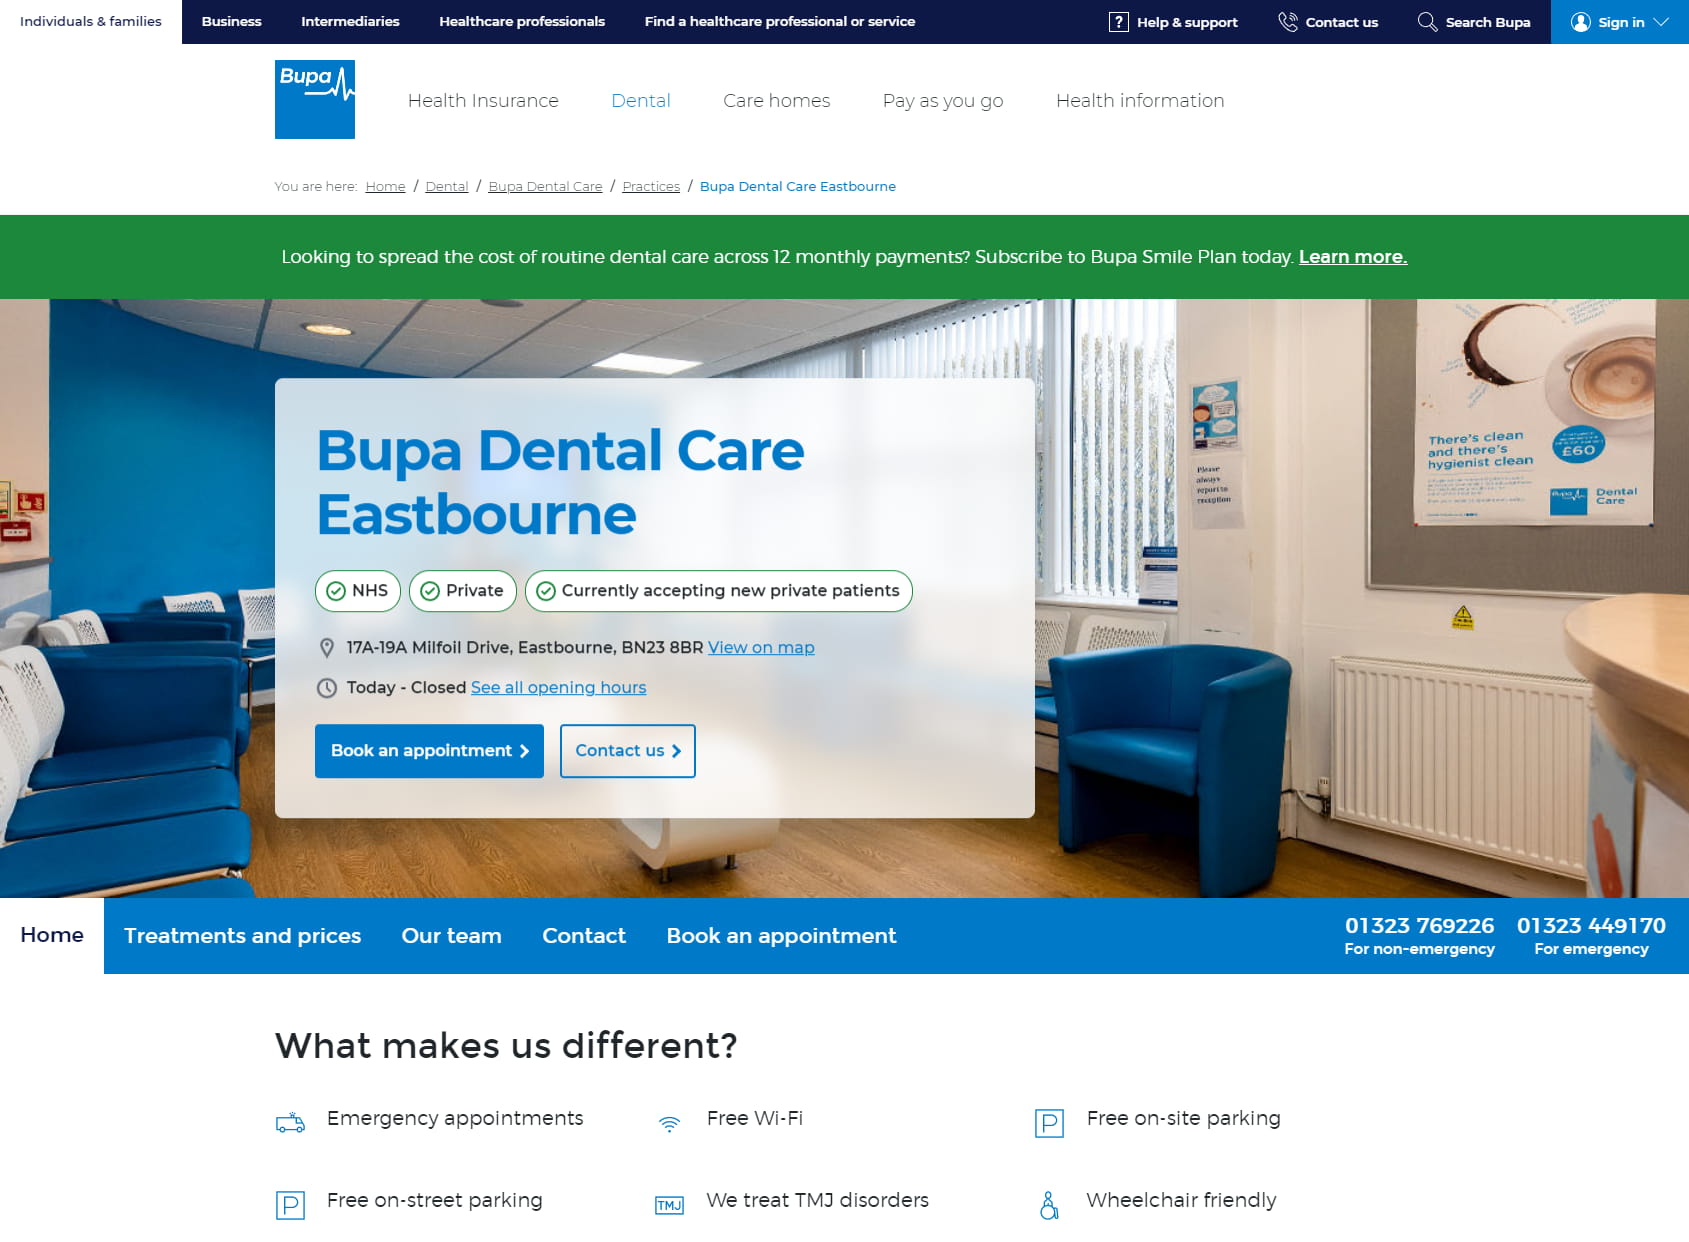 Bupa Dental Care Eastbourne